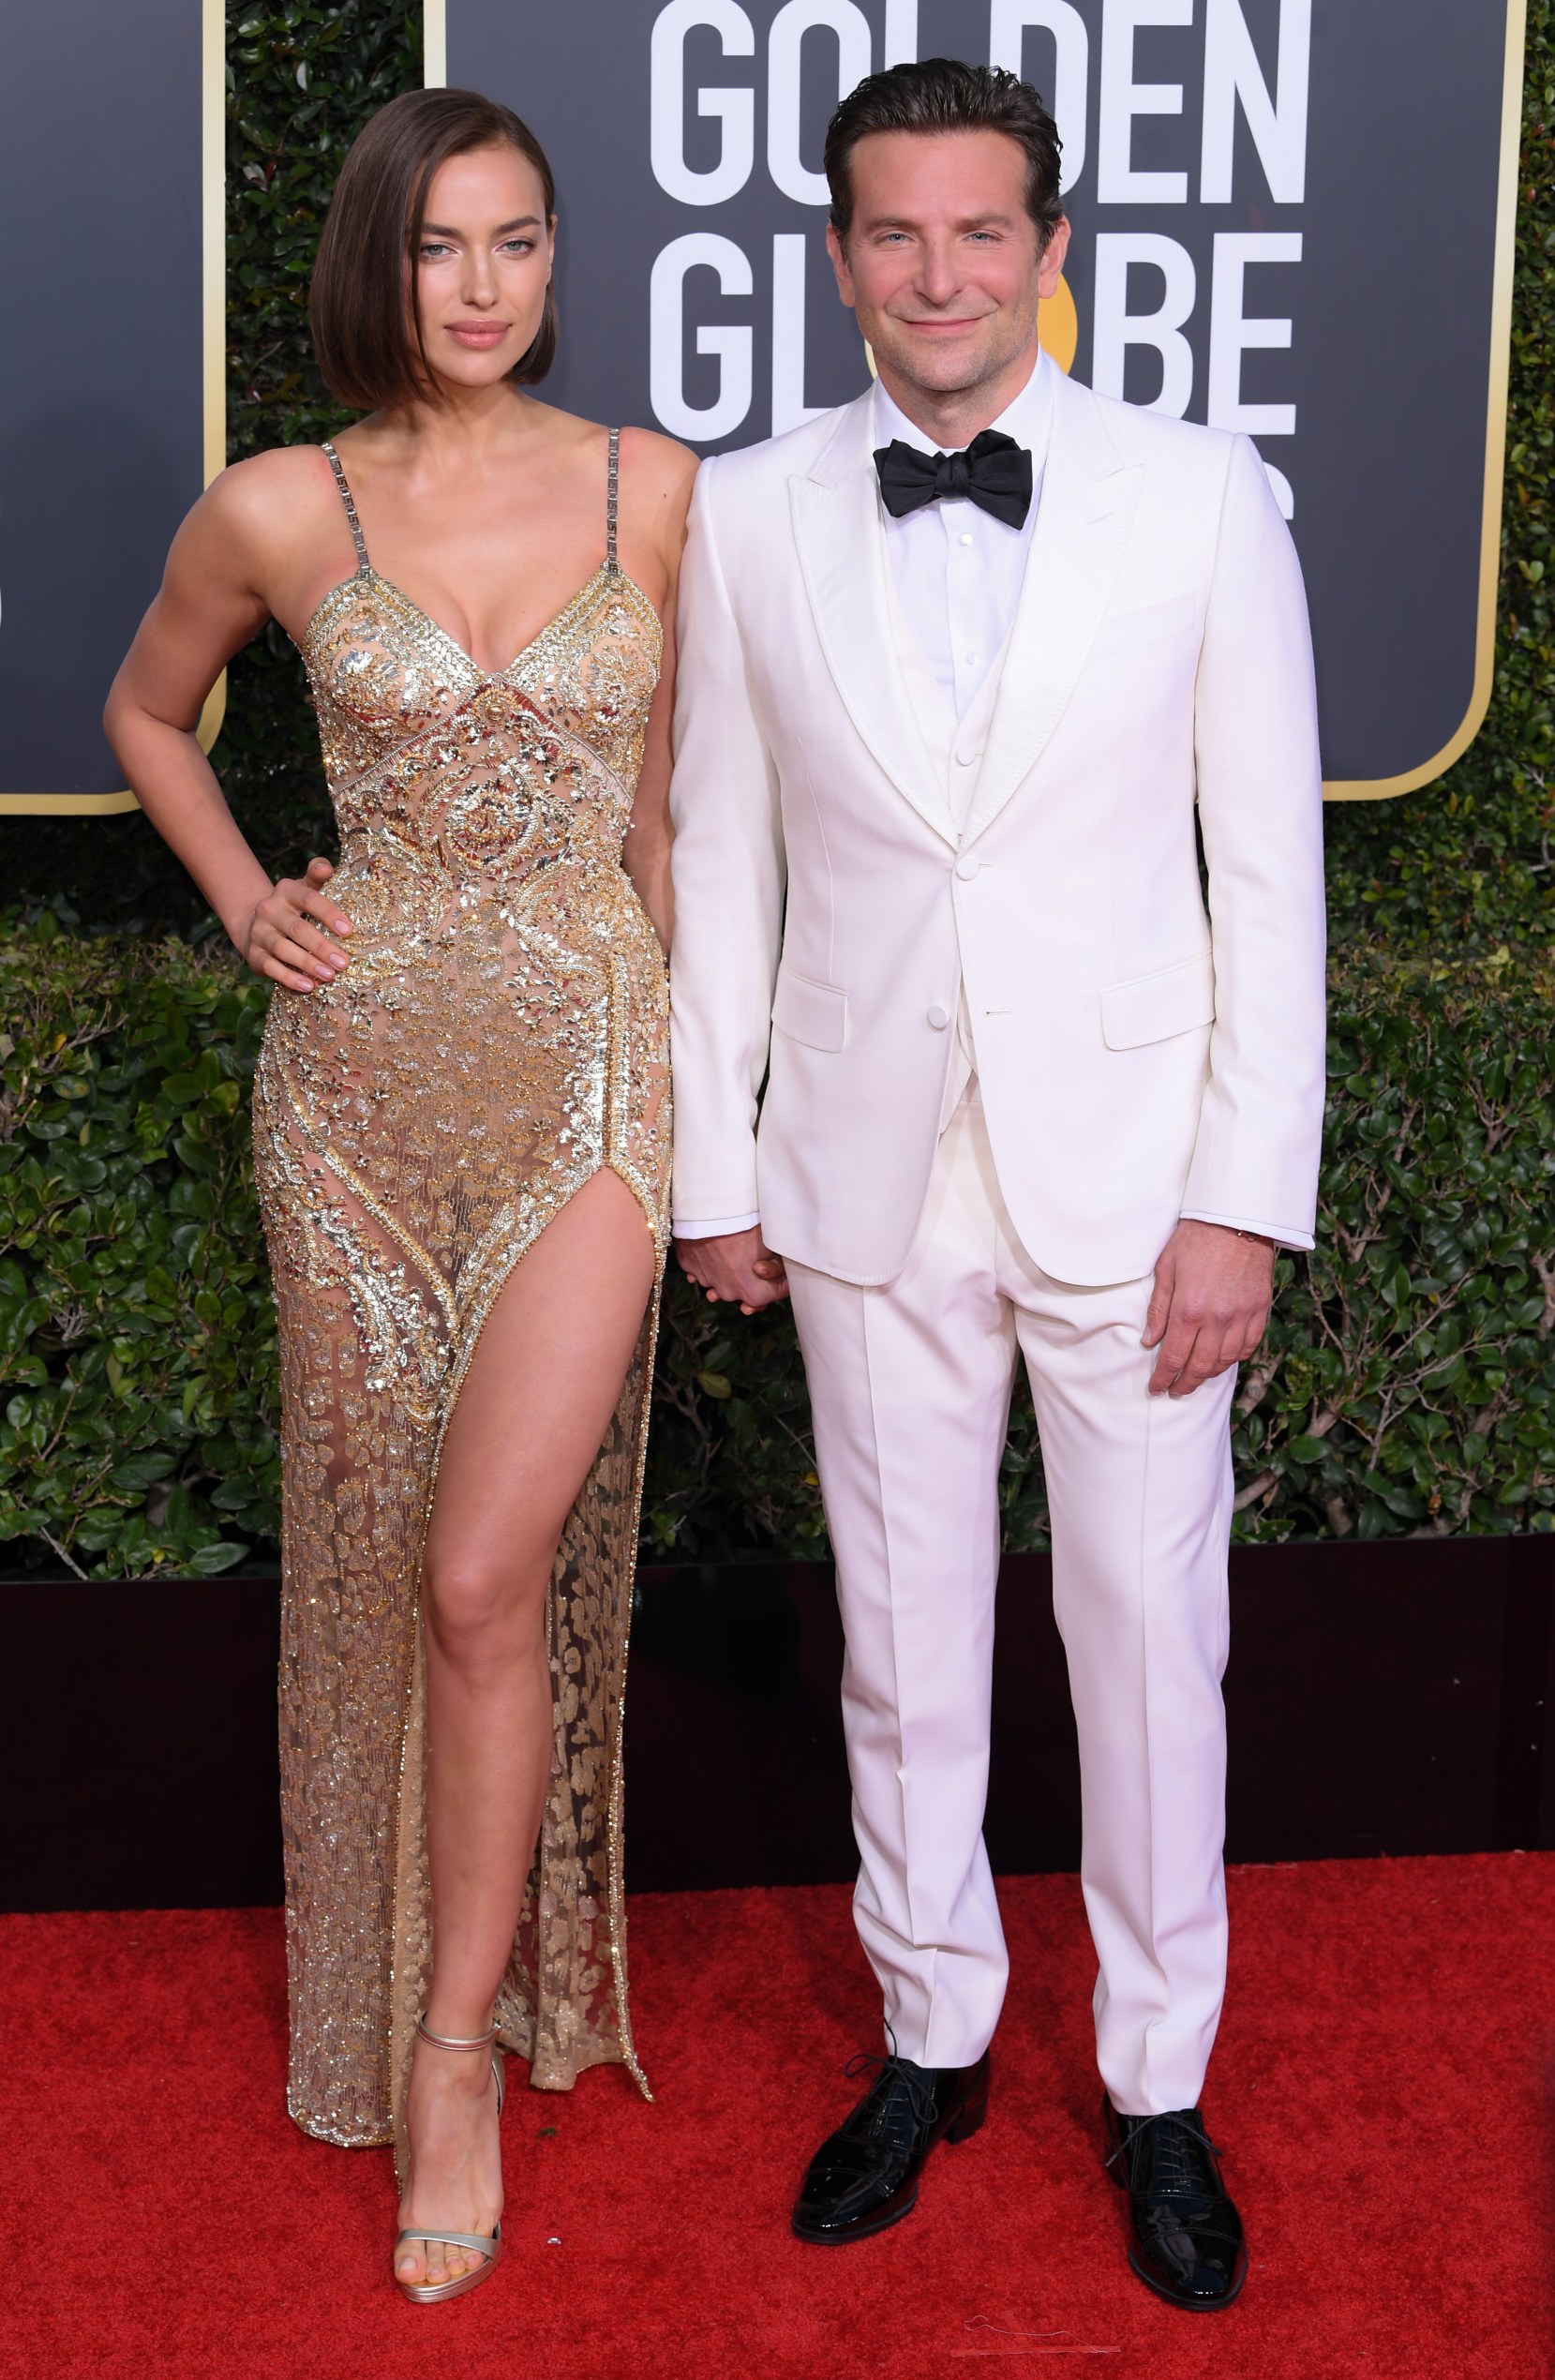 Bradley Cooper 'Slowly' Dating Again Following Irina Shayk Split